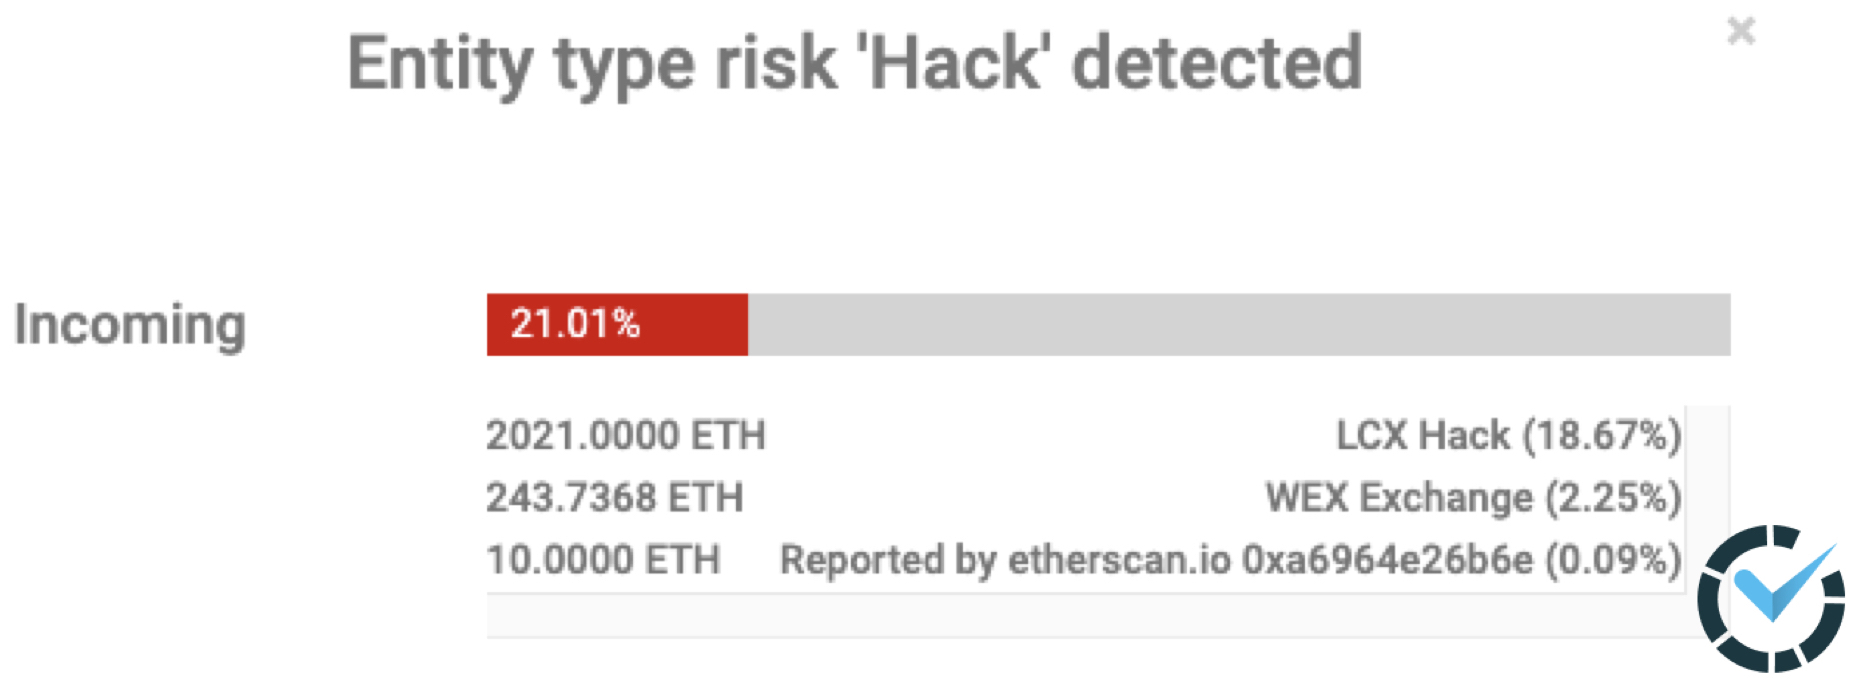 Hack risk indicator on Scorechain platform